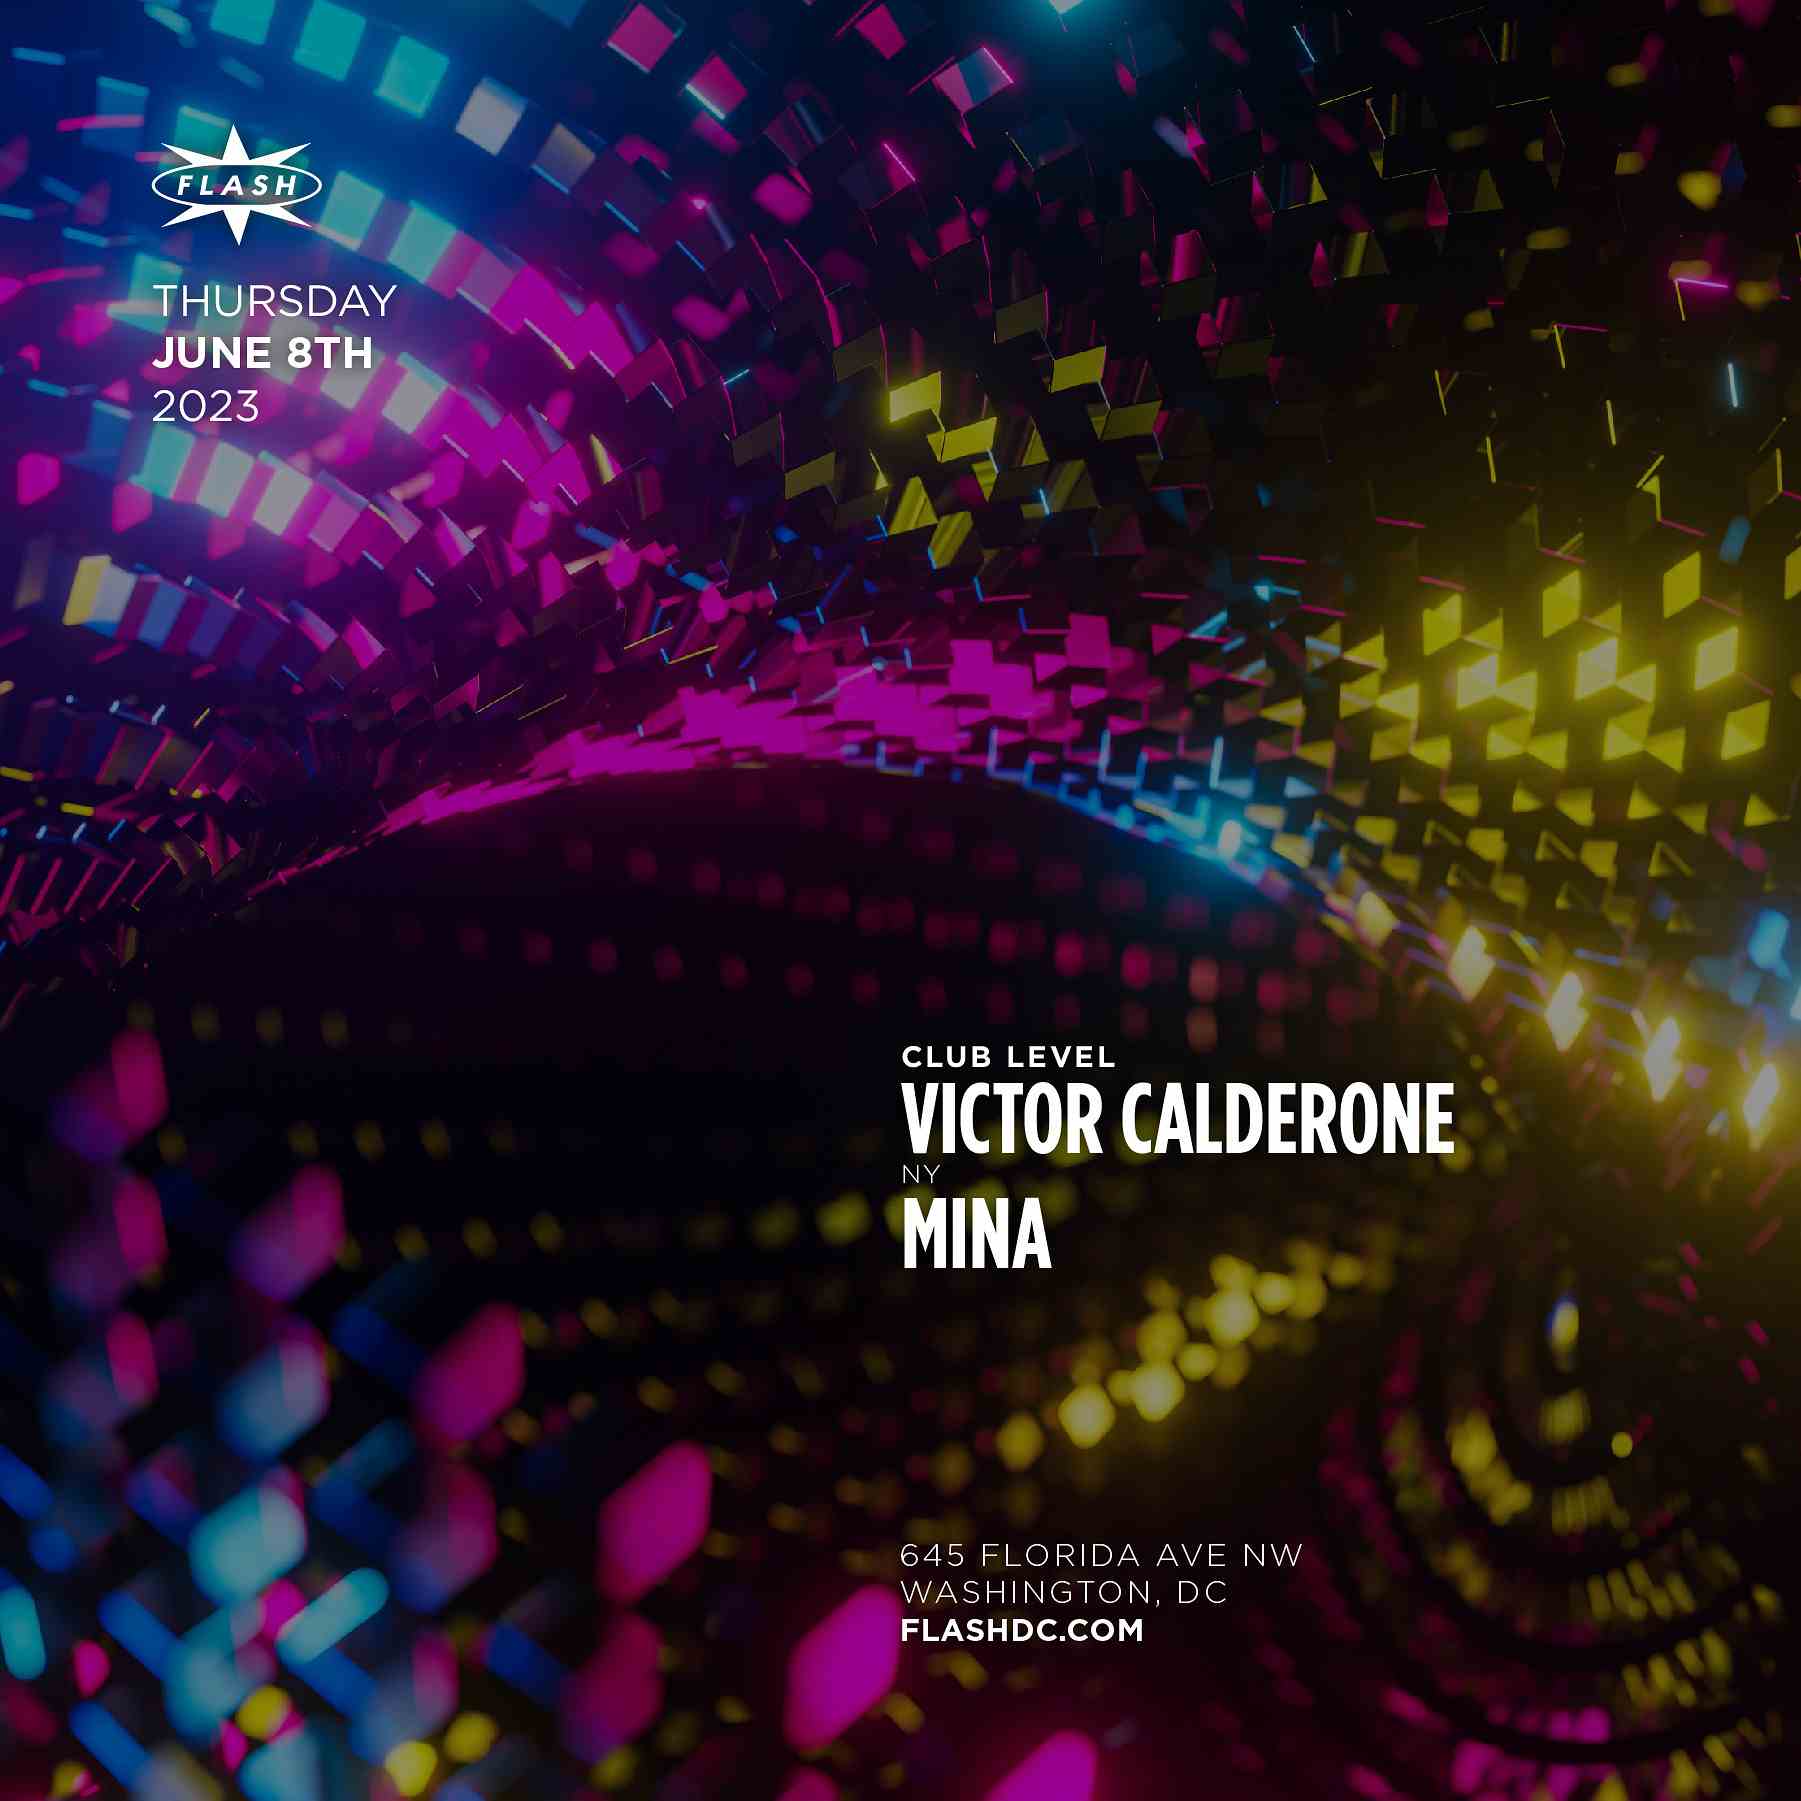 Victor Calderone - Mina event flyer